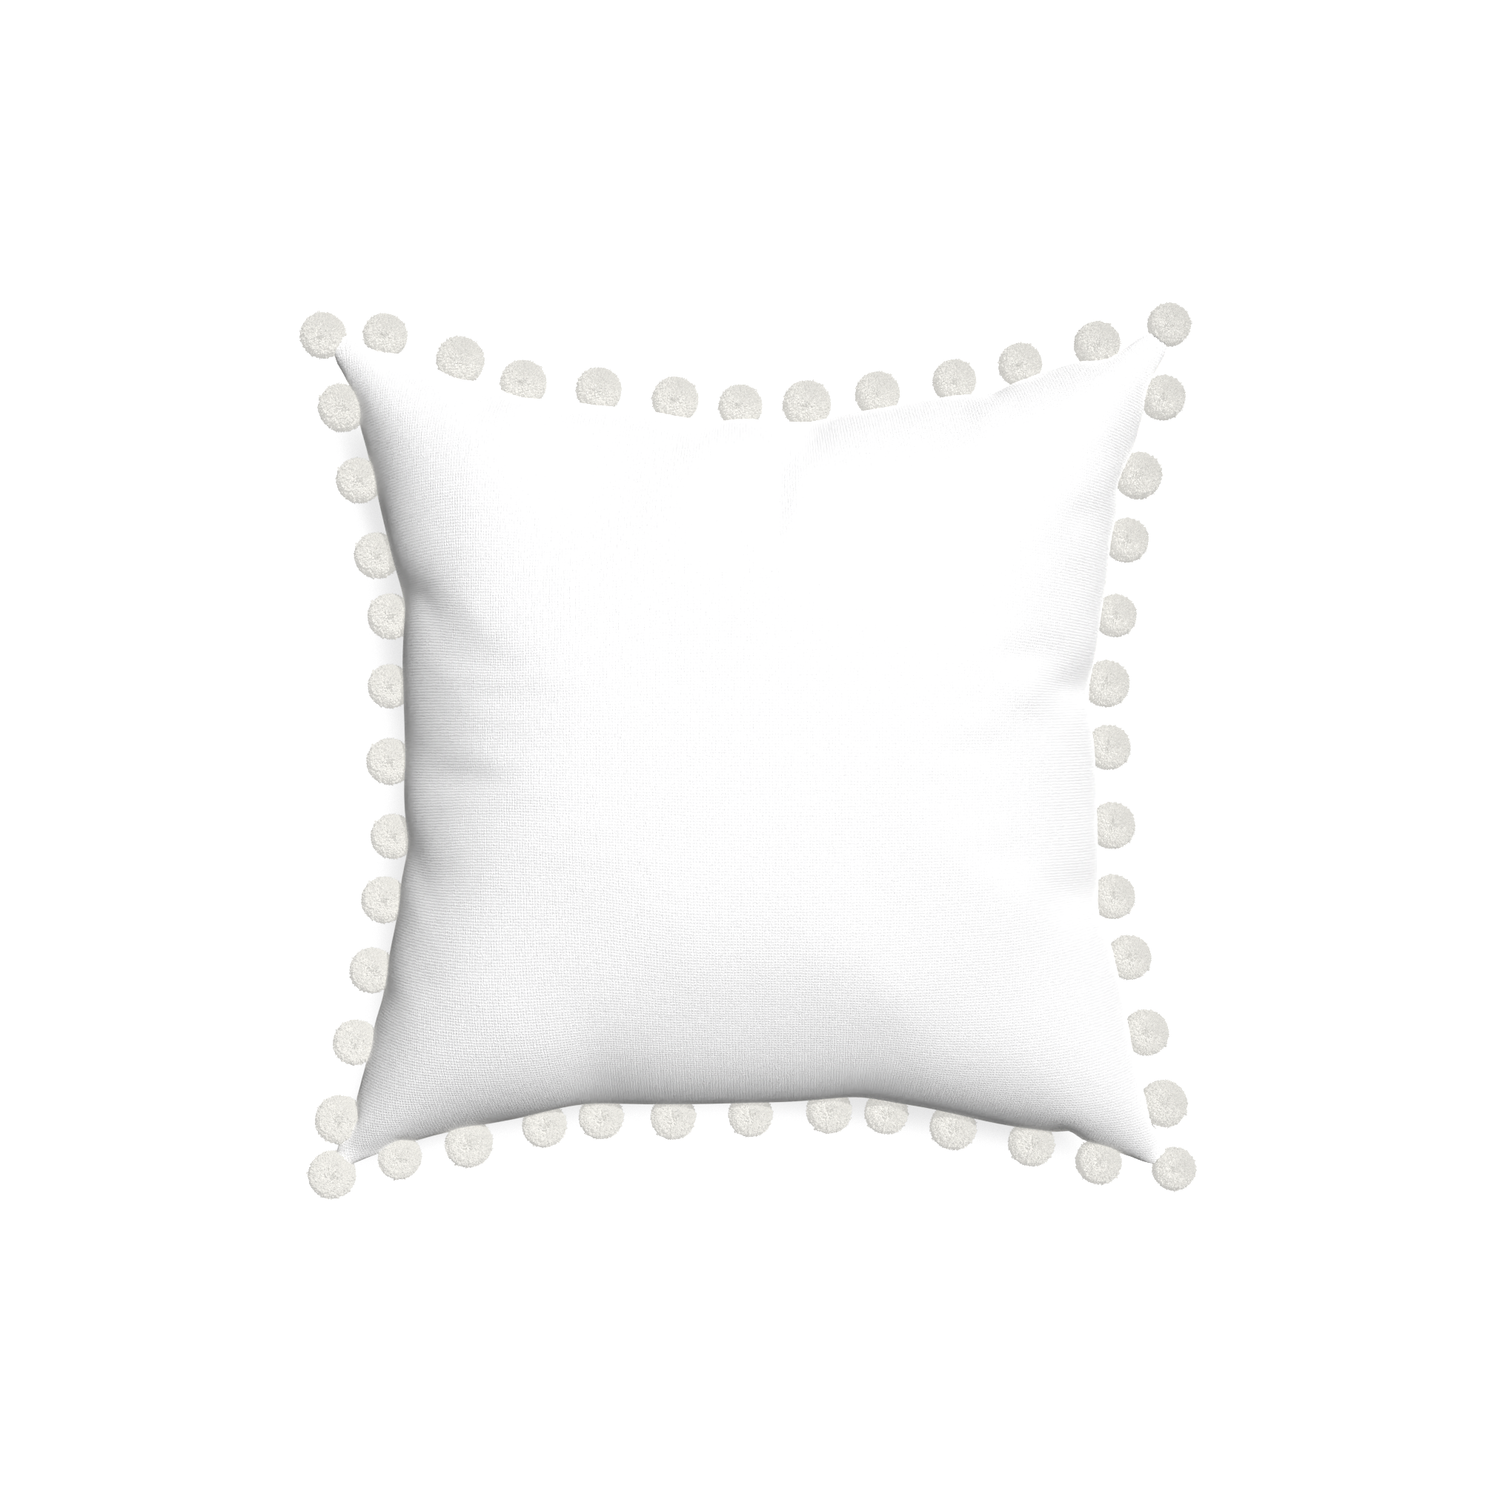 18-square snow custom pillow with snow pom pom on white background